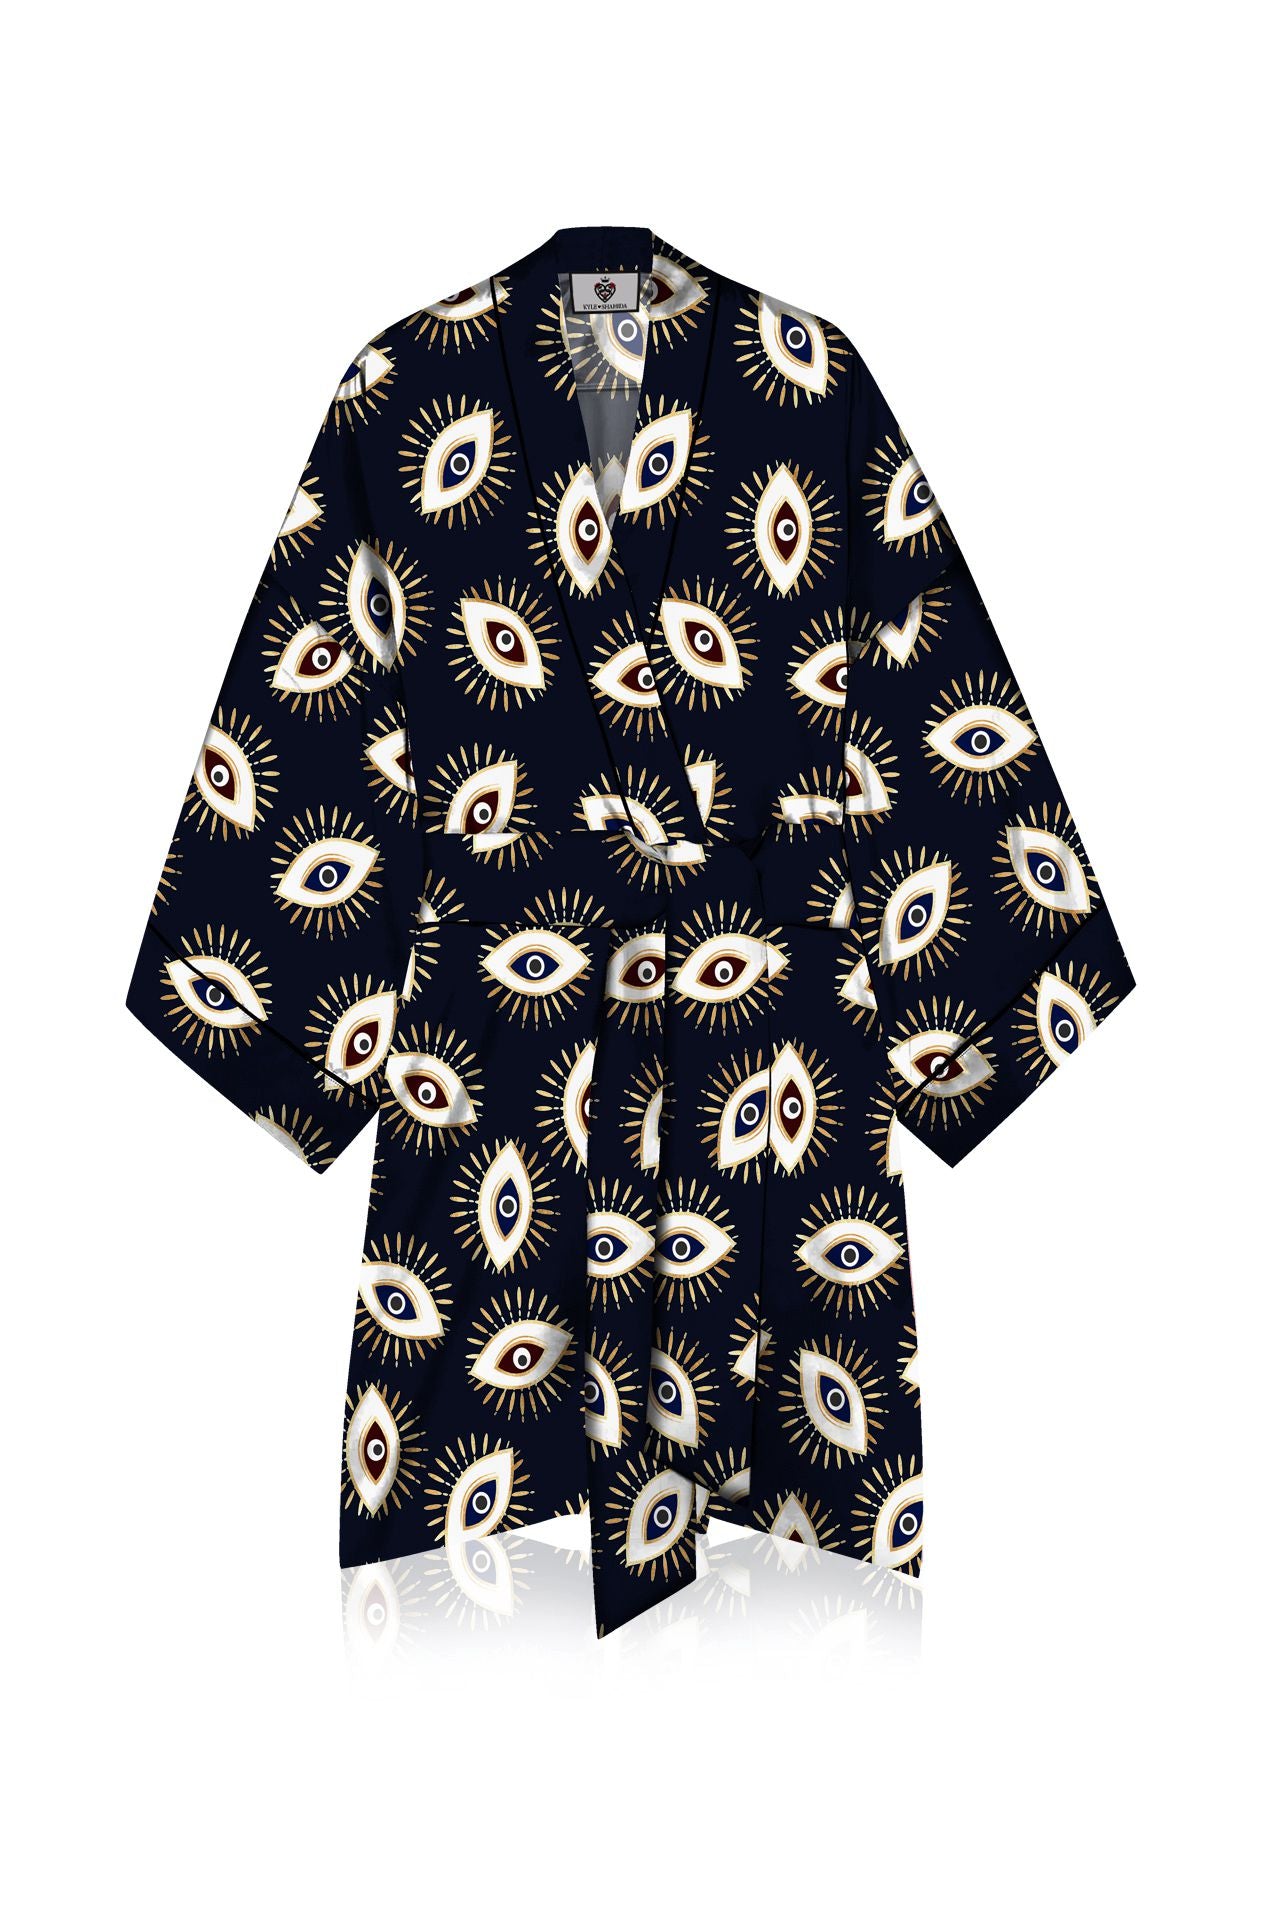 "kimono short dresses" "short kimonos for women" "Kyle X Shahida" "printed robes womens"